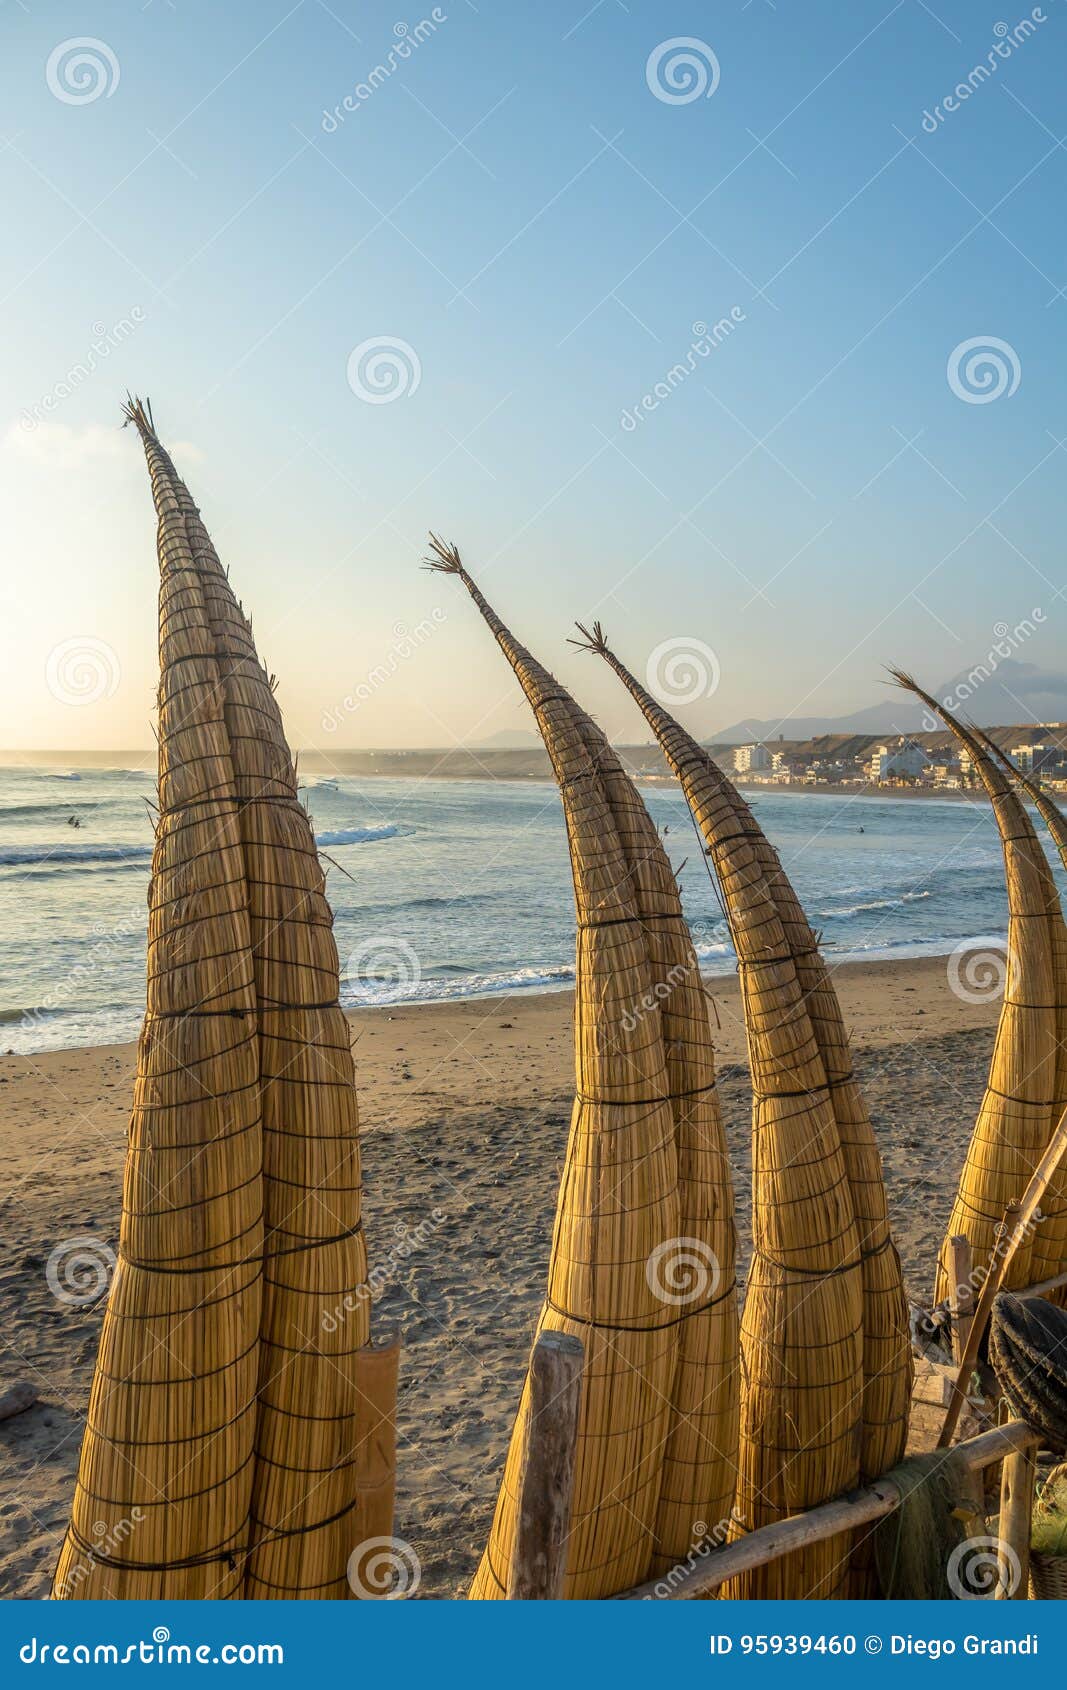 huanchaco beach and the traditional reed boats & x28;caballitos de totora& x29; - trujillo, peru